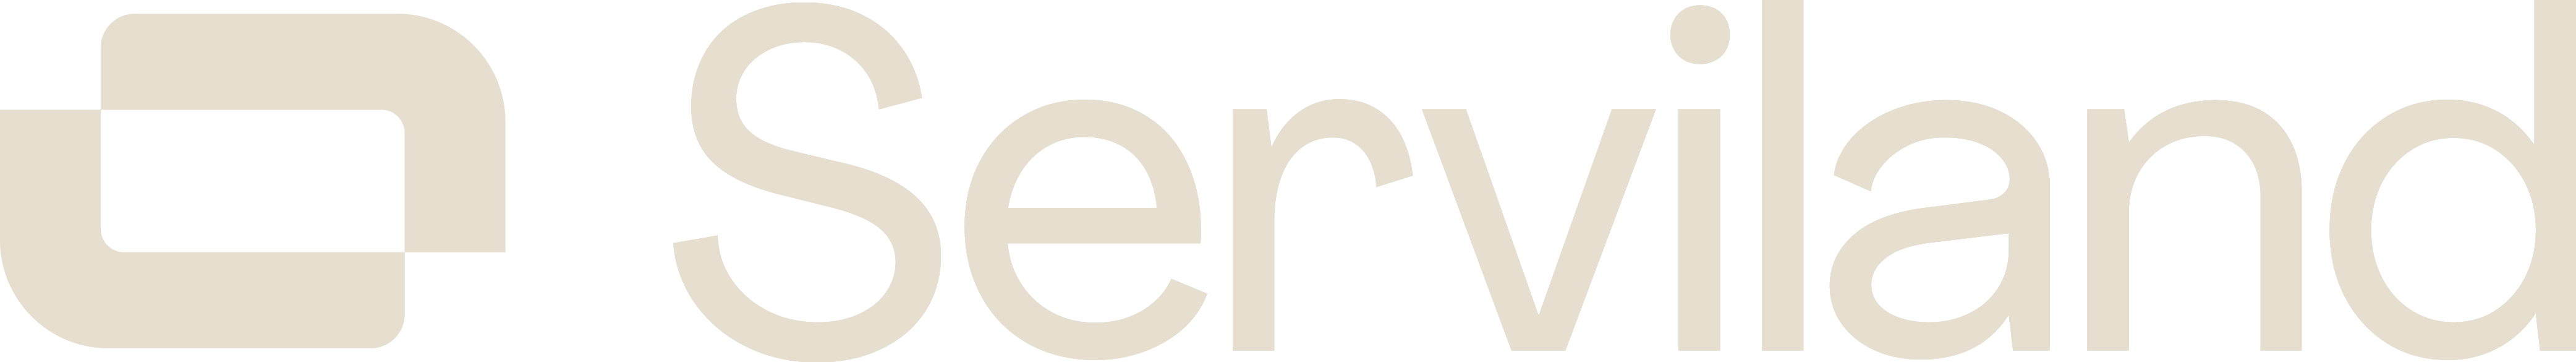 SERVILAND logo